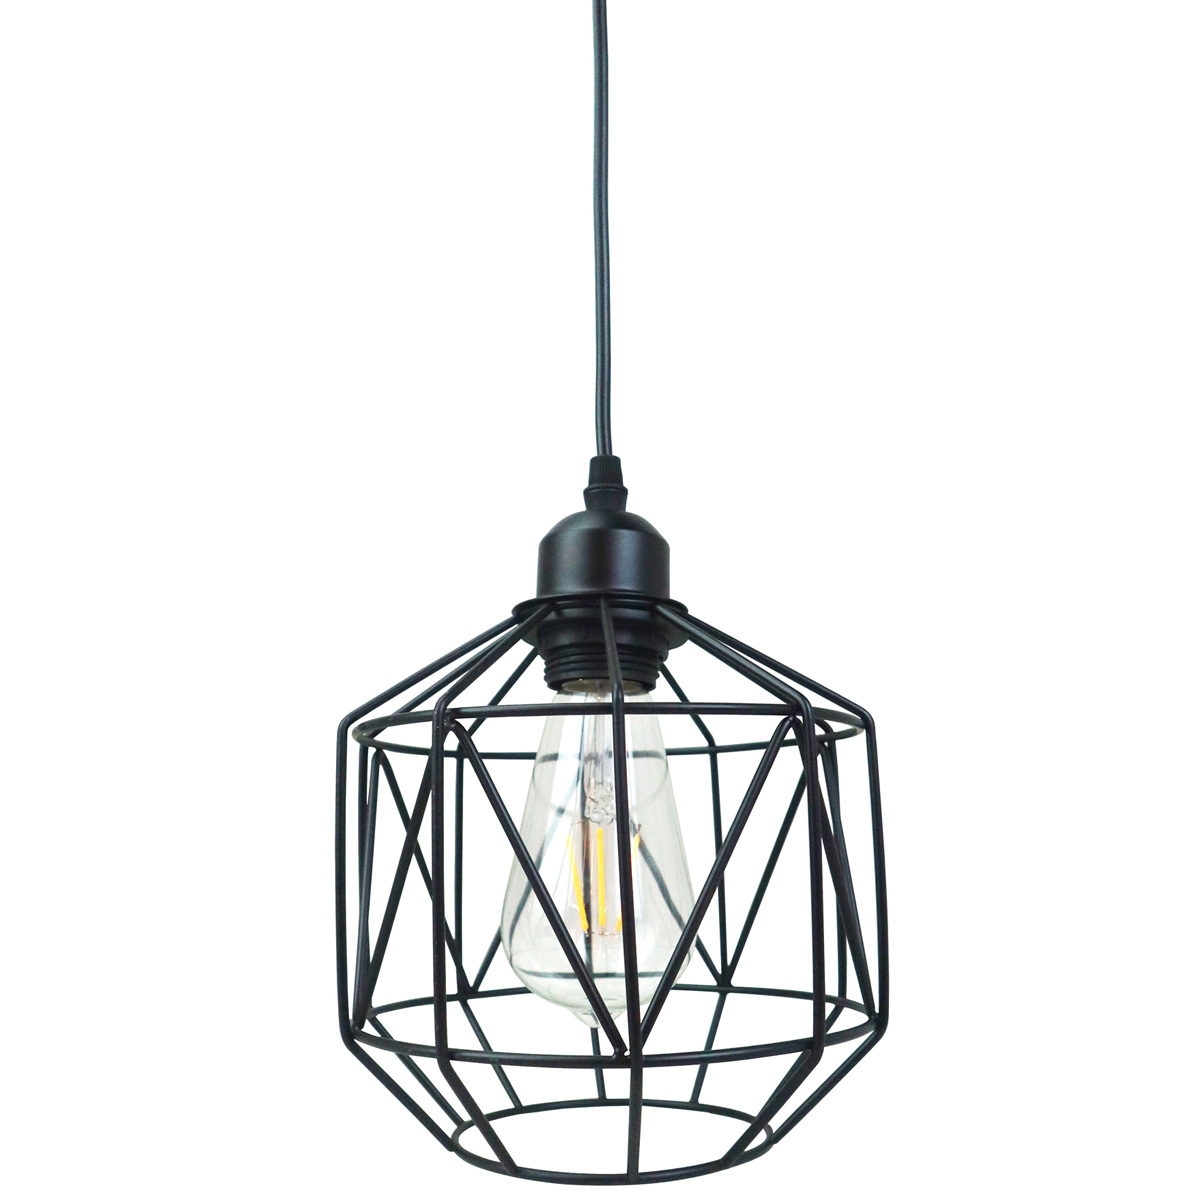 Modern-Home-Metal-Pendant-Lamp-Industrial-Hanging-Light-Fixture-Ceiling-Lamp-1841326-4